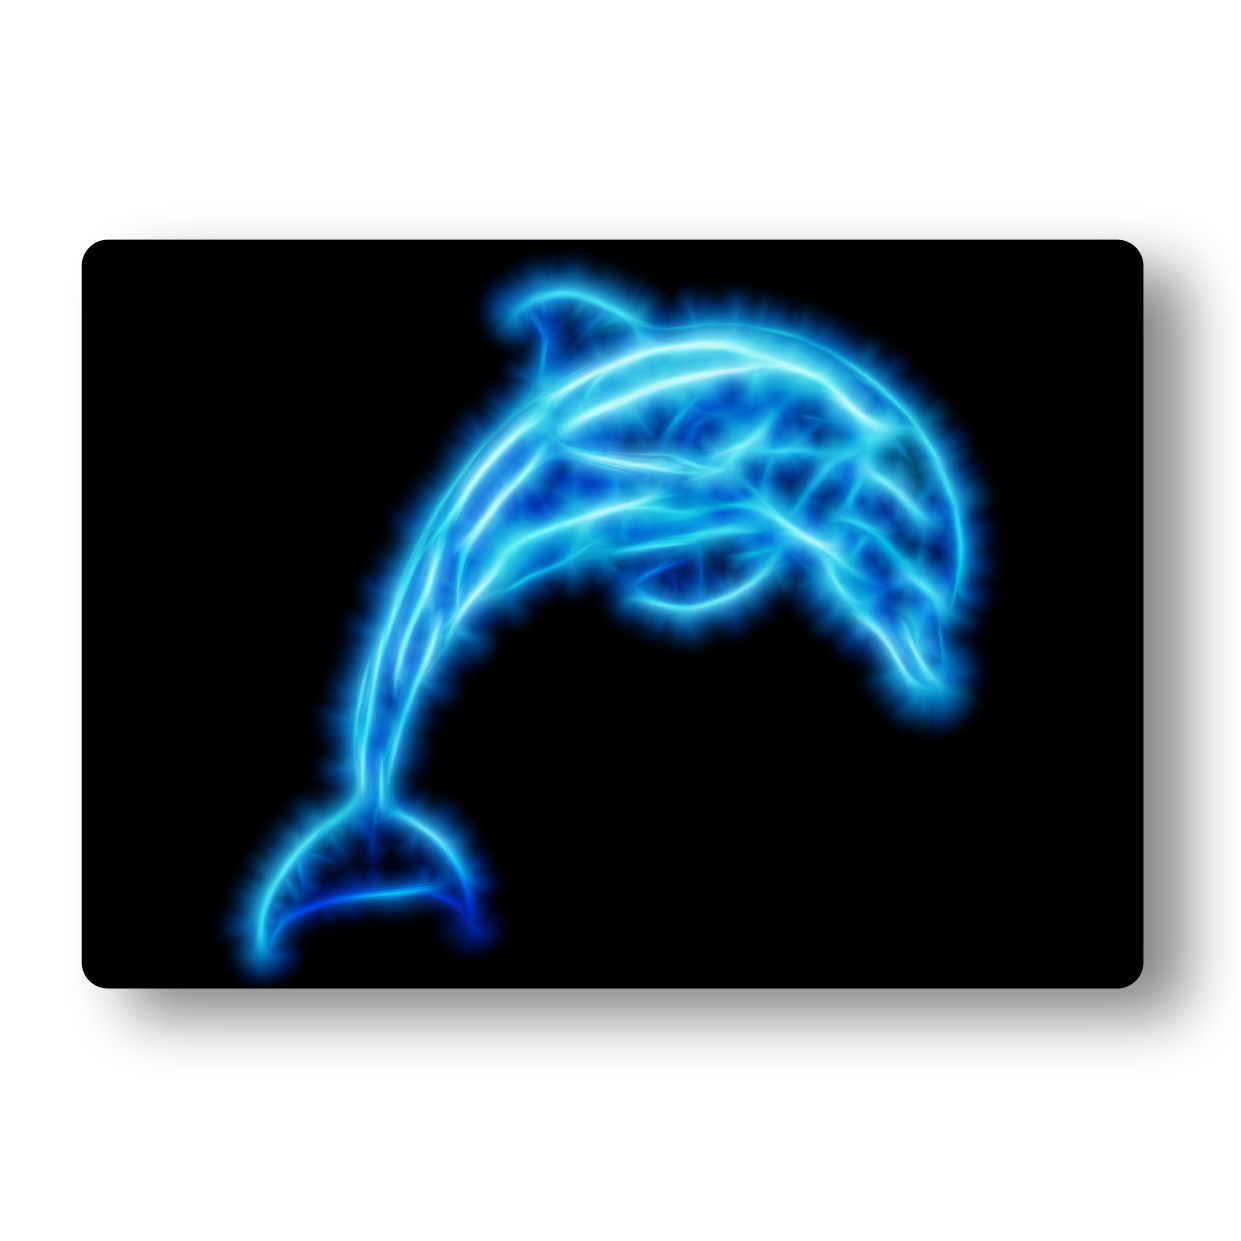 Dolphin (Blue) Fractal Art Metal Wall Plaque